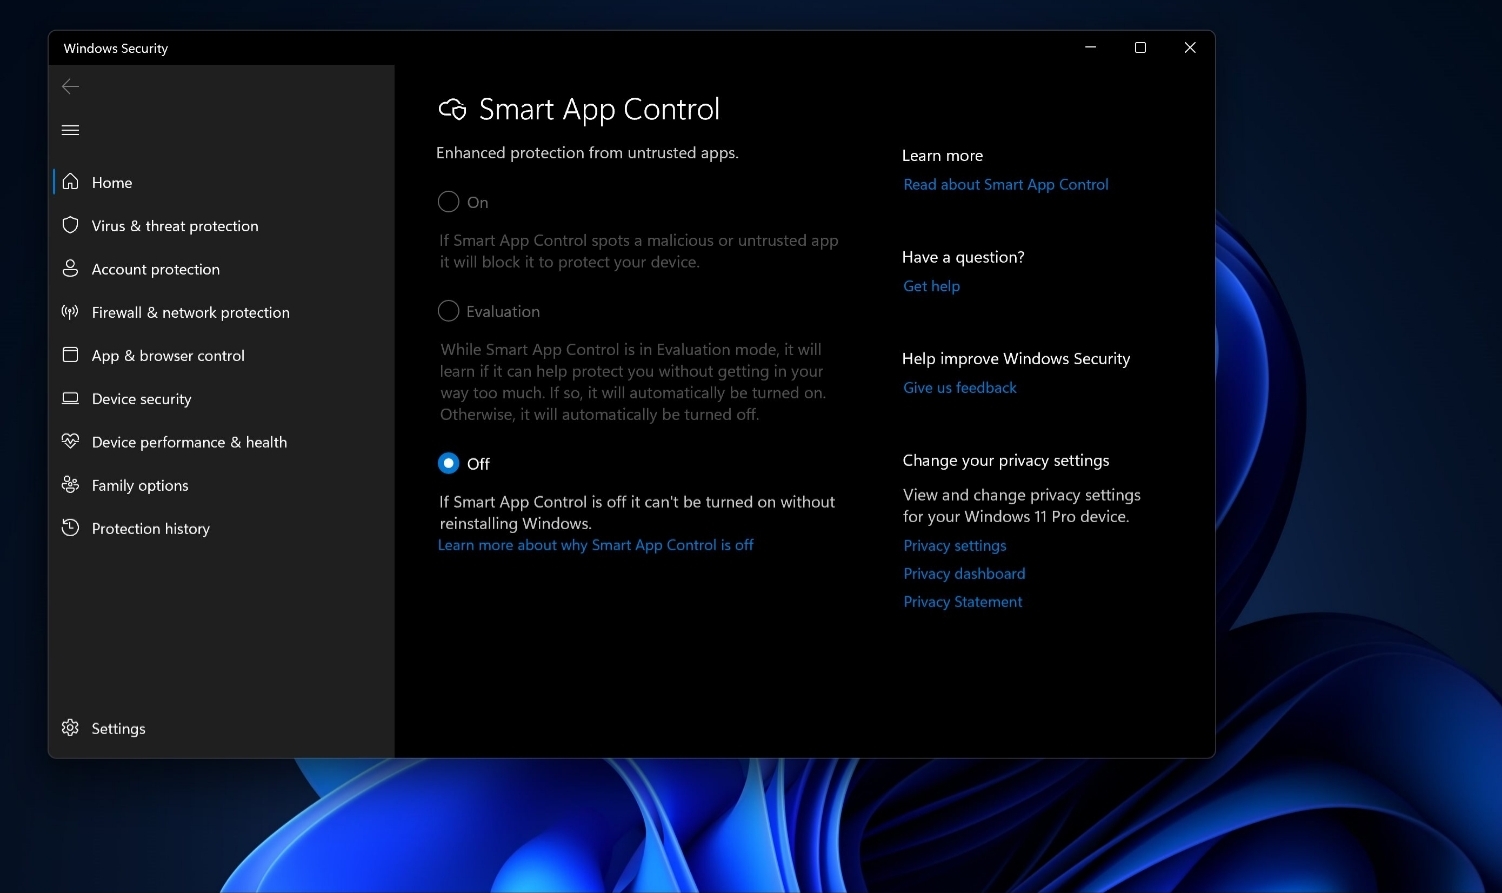 Windows 11 Smart App Control settings